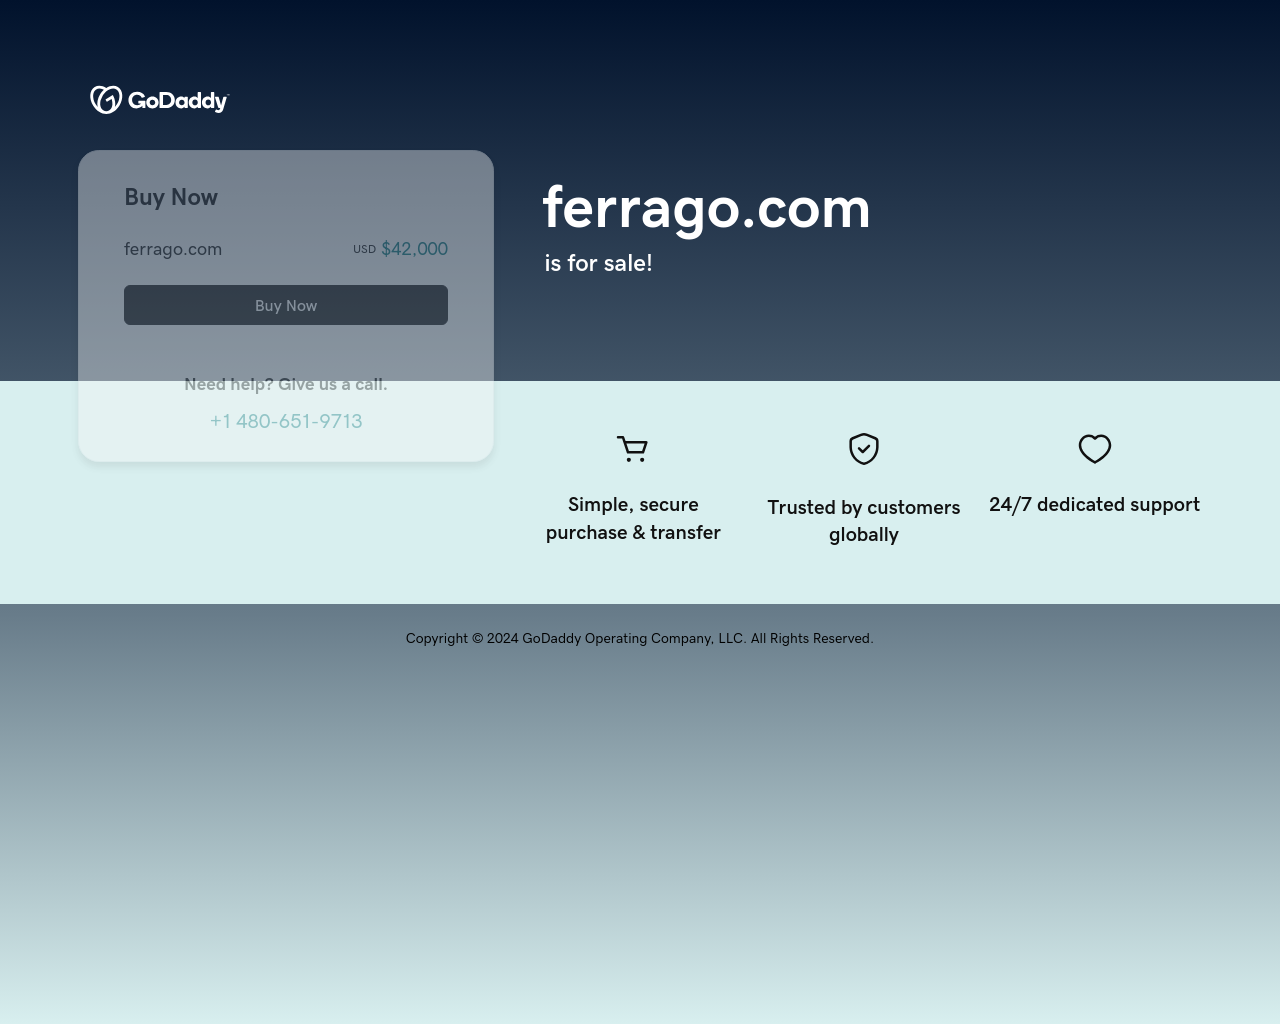 ferrago.com